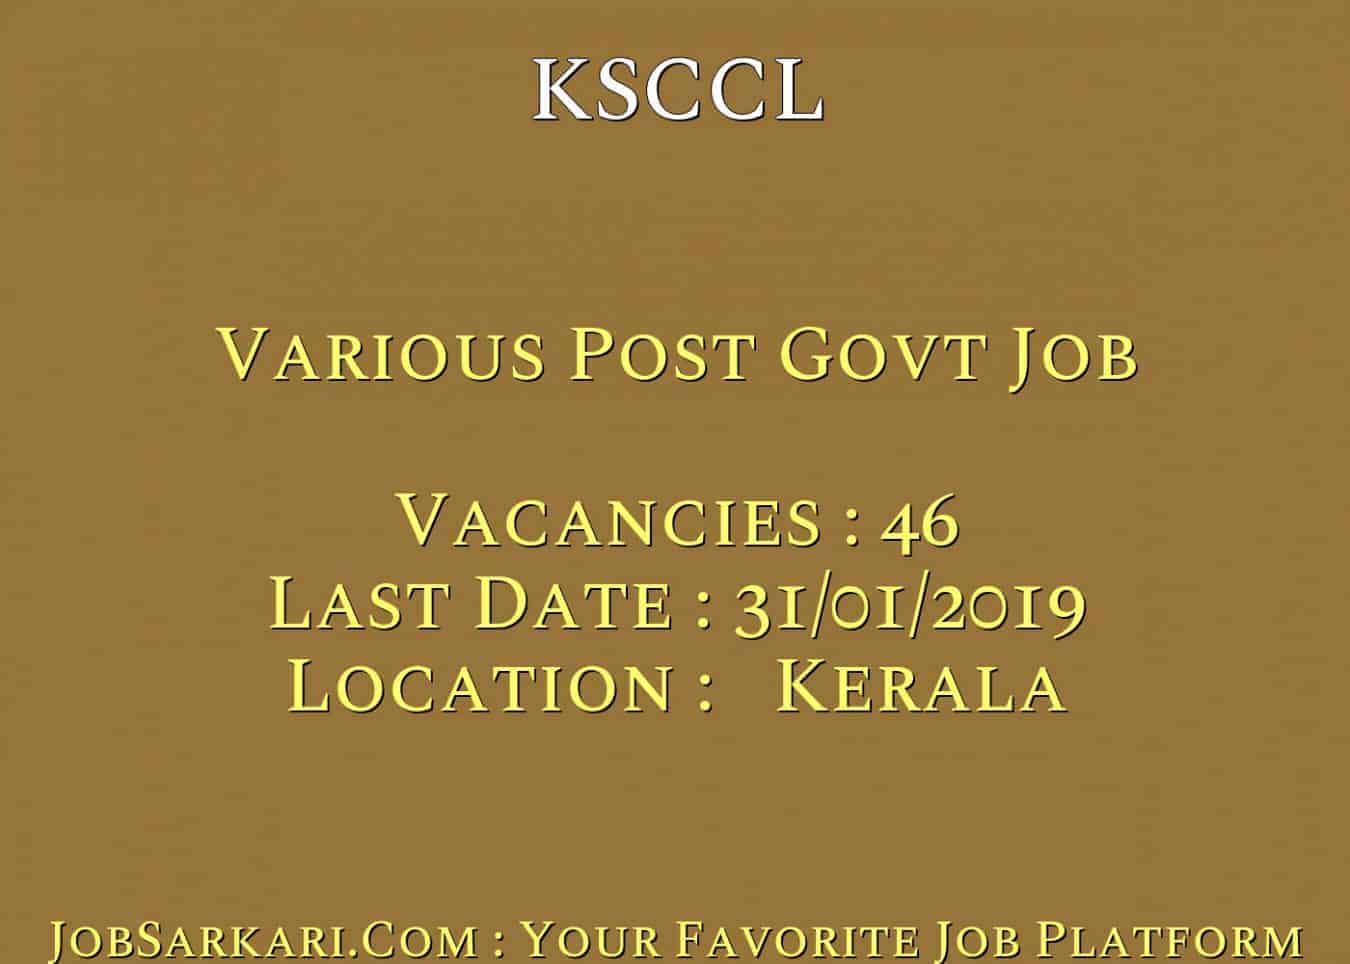 KSCCL Recruitment 2019 For Various Post Govt Job